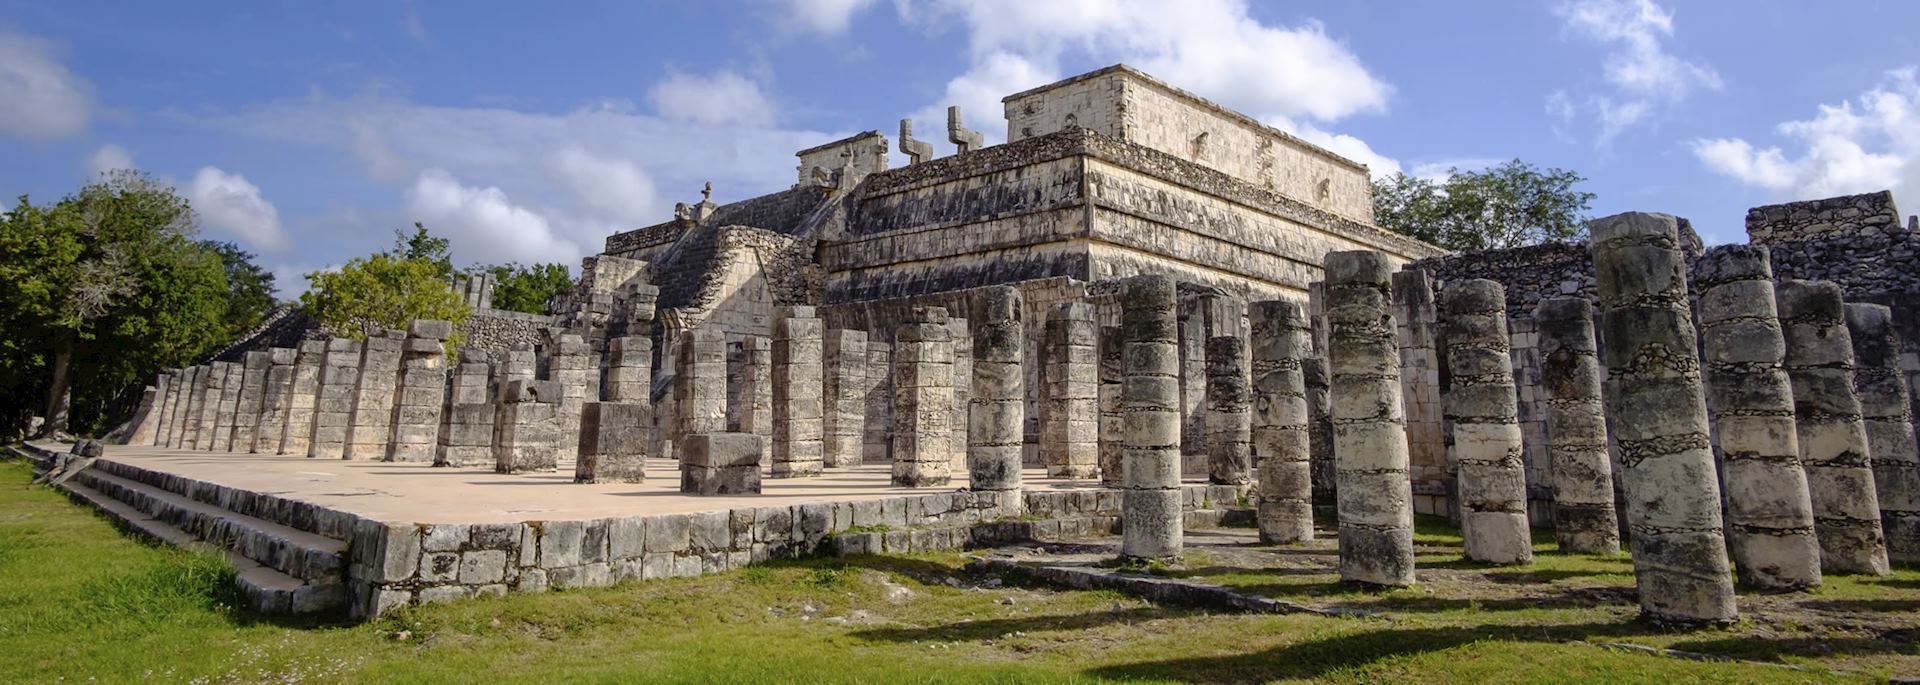 Temple of the Warriors, Chichén Itzá